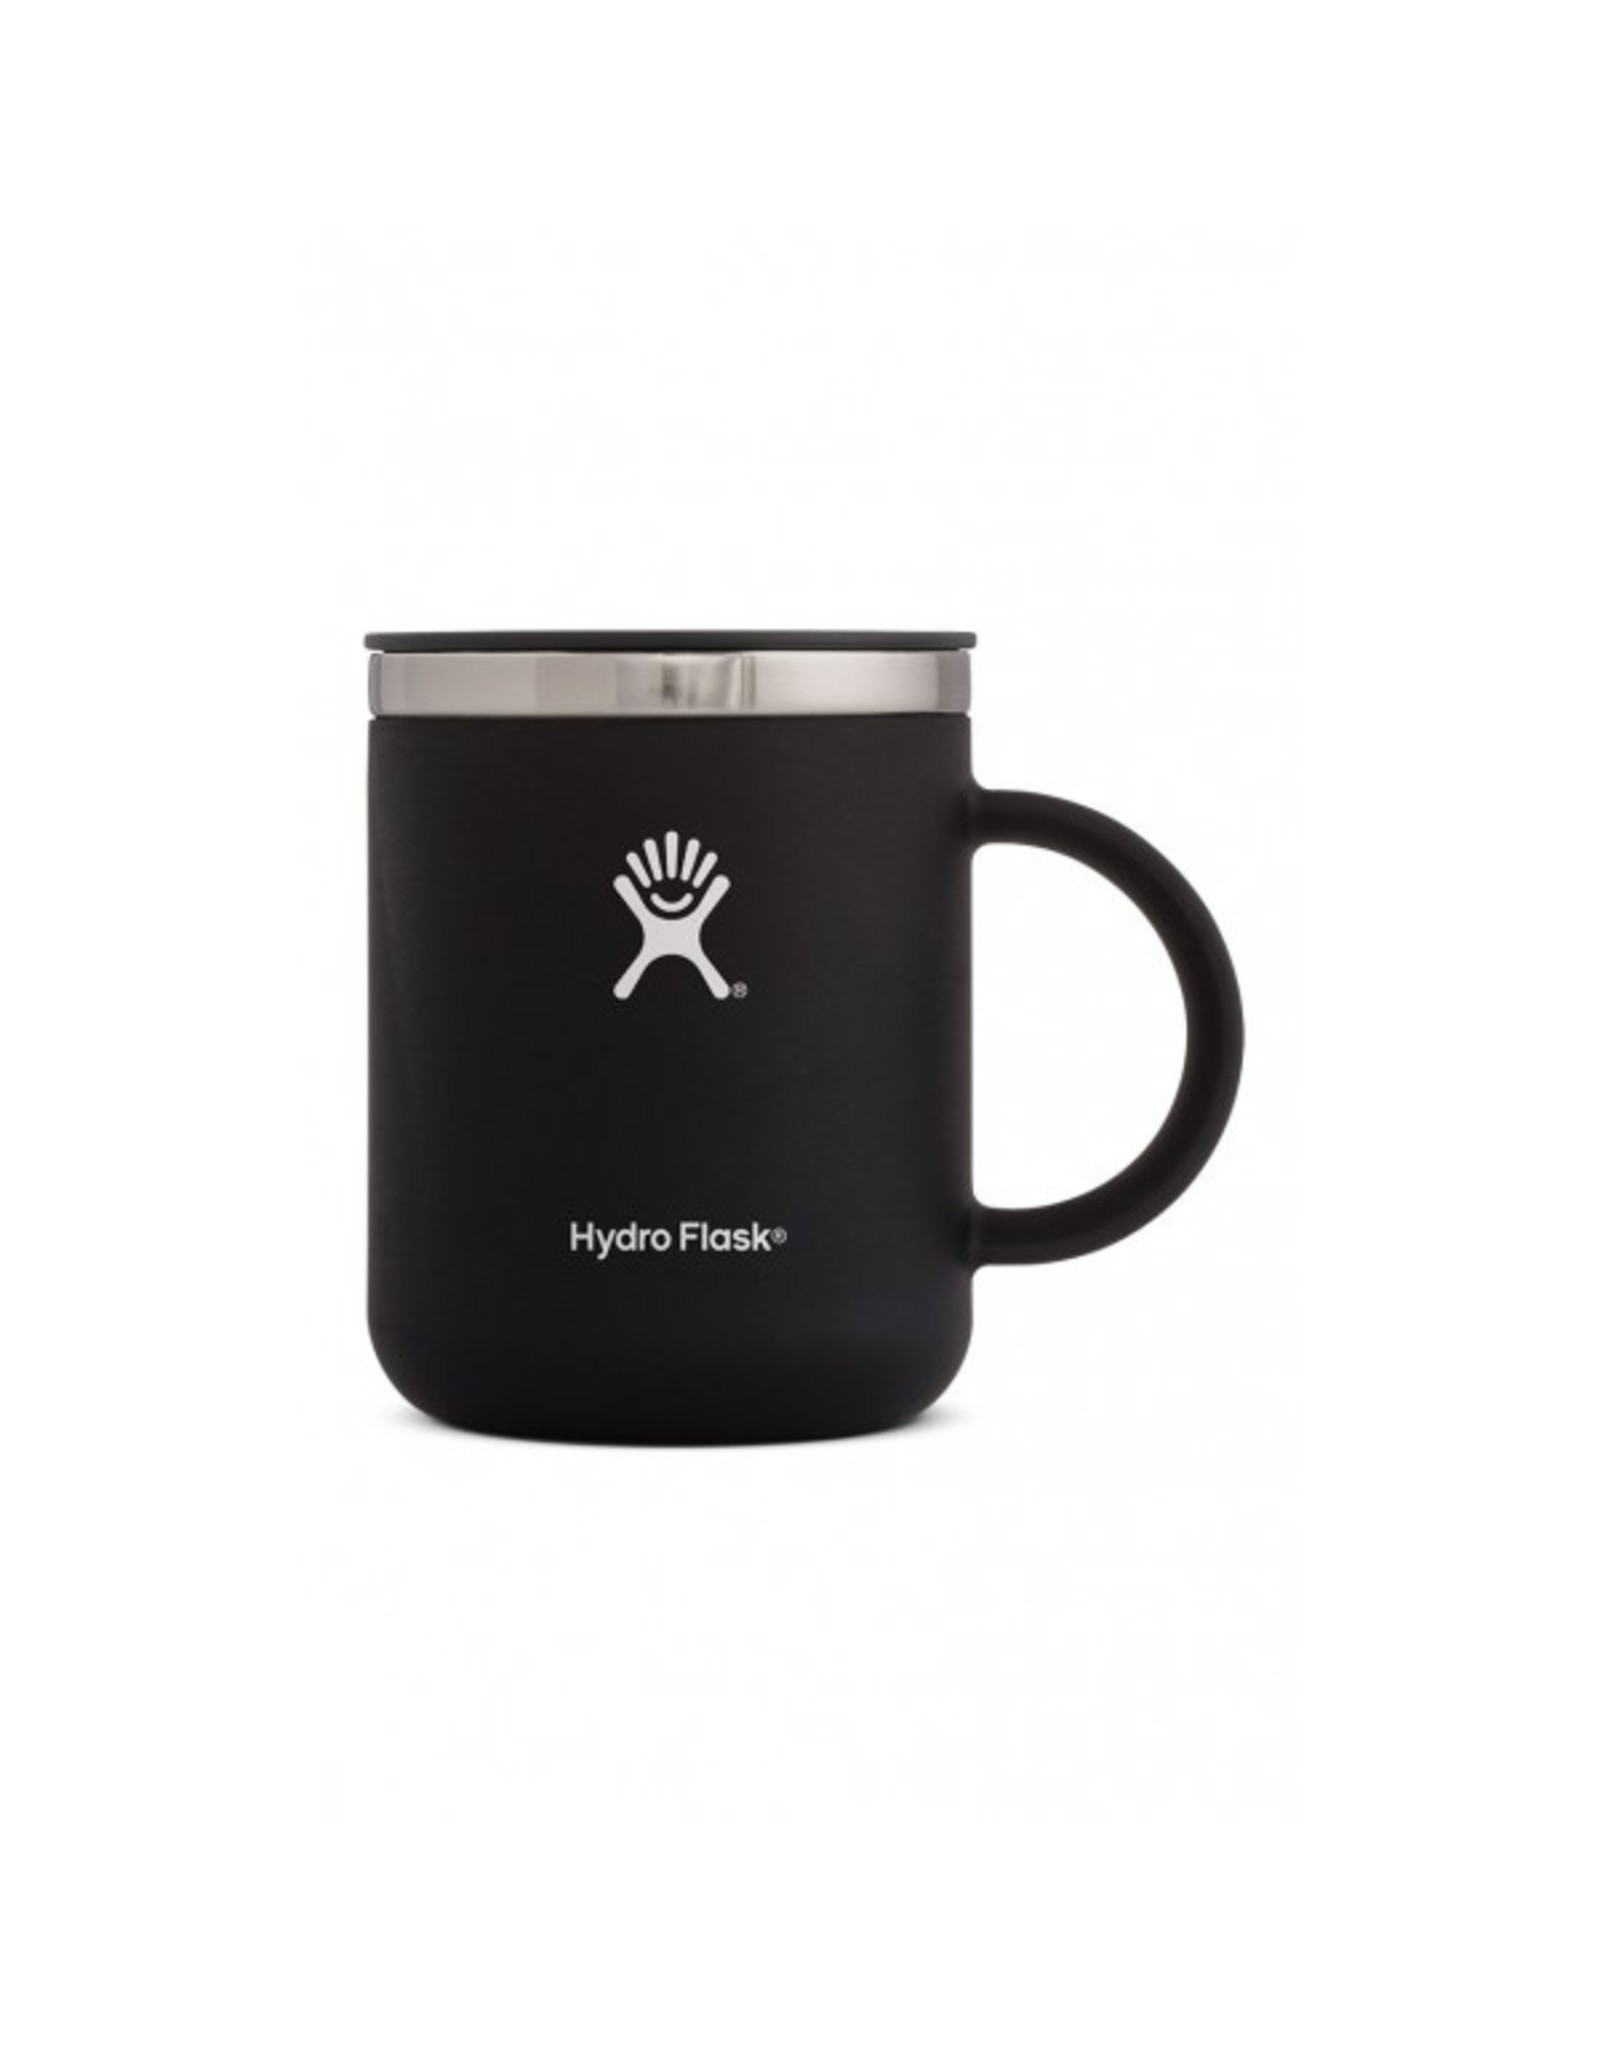 Hydro Flask 12 OZ COFFEE MUG